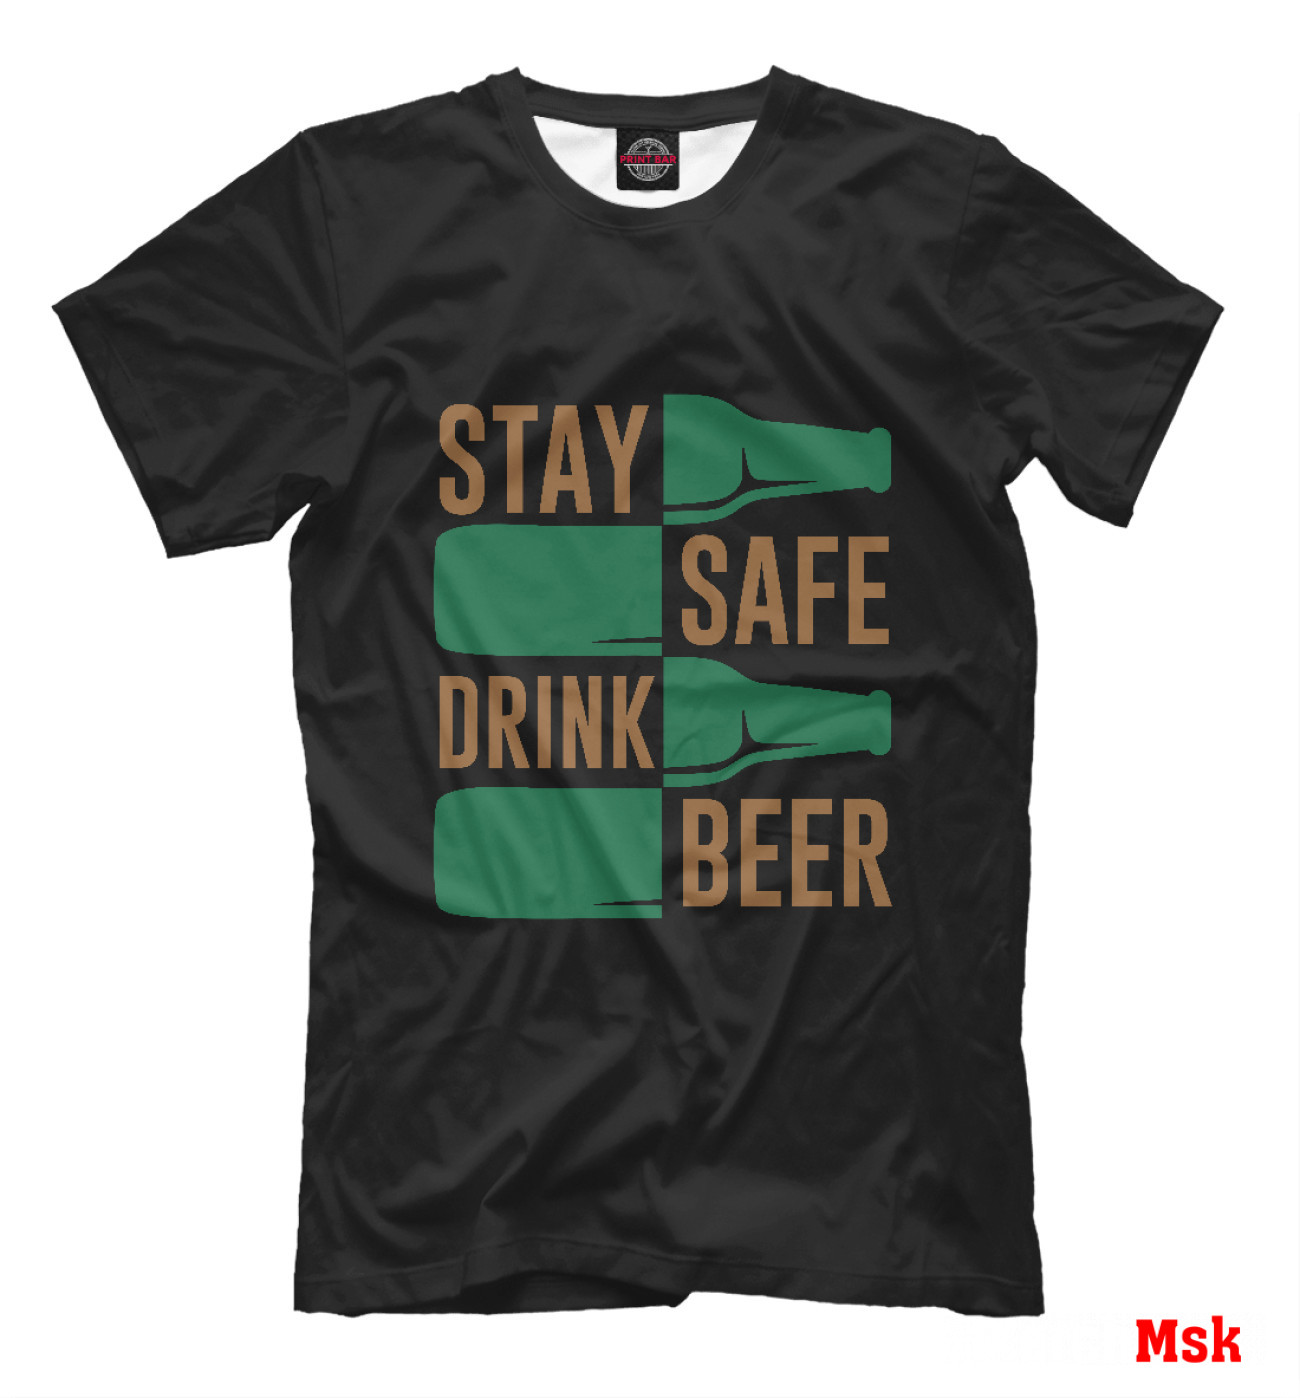 Мужская Футболка Stay safe drink beer, артикул: PIV-677978-fut-2